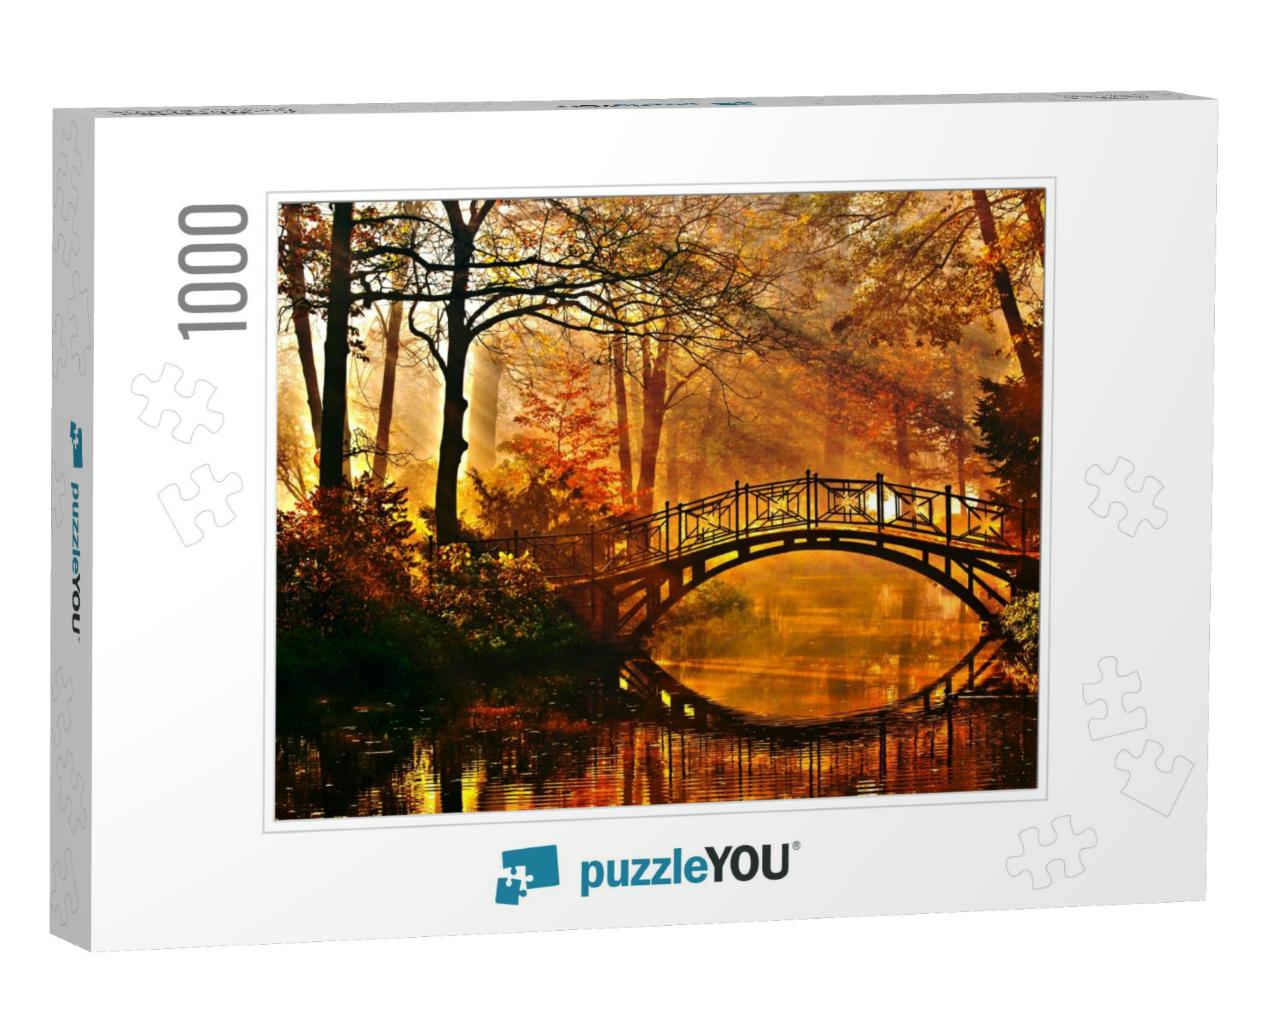 Autumn - Old Bridge in Autumn Misty Park... Jigsaw Puzzle with 1000 pieces